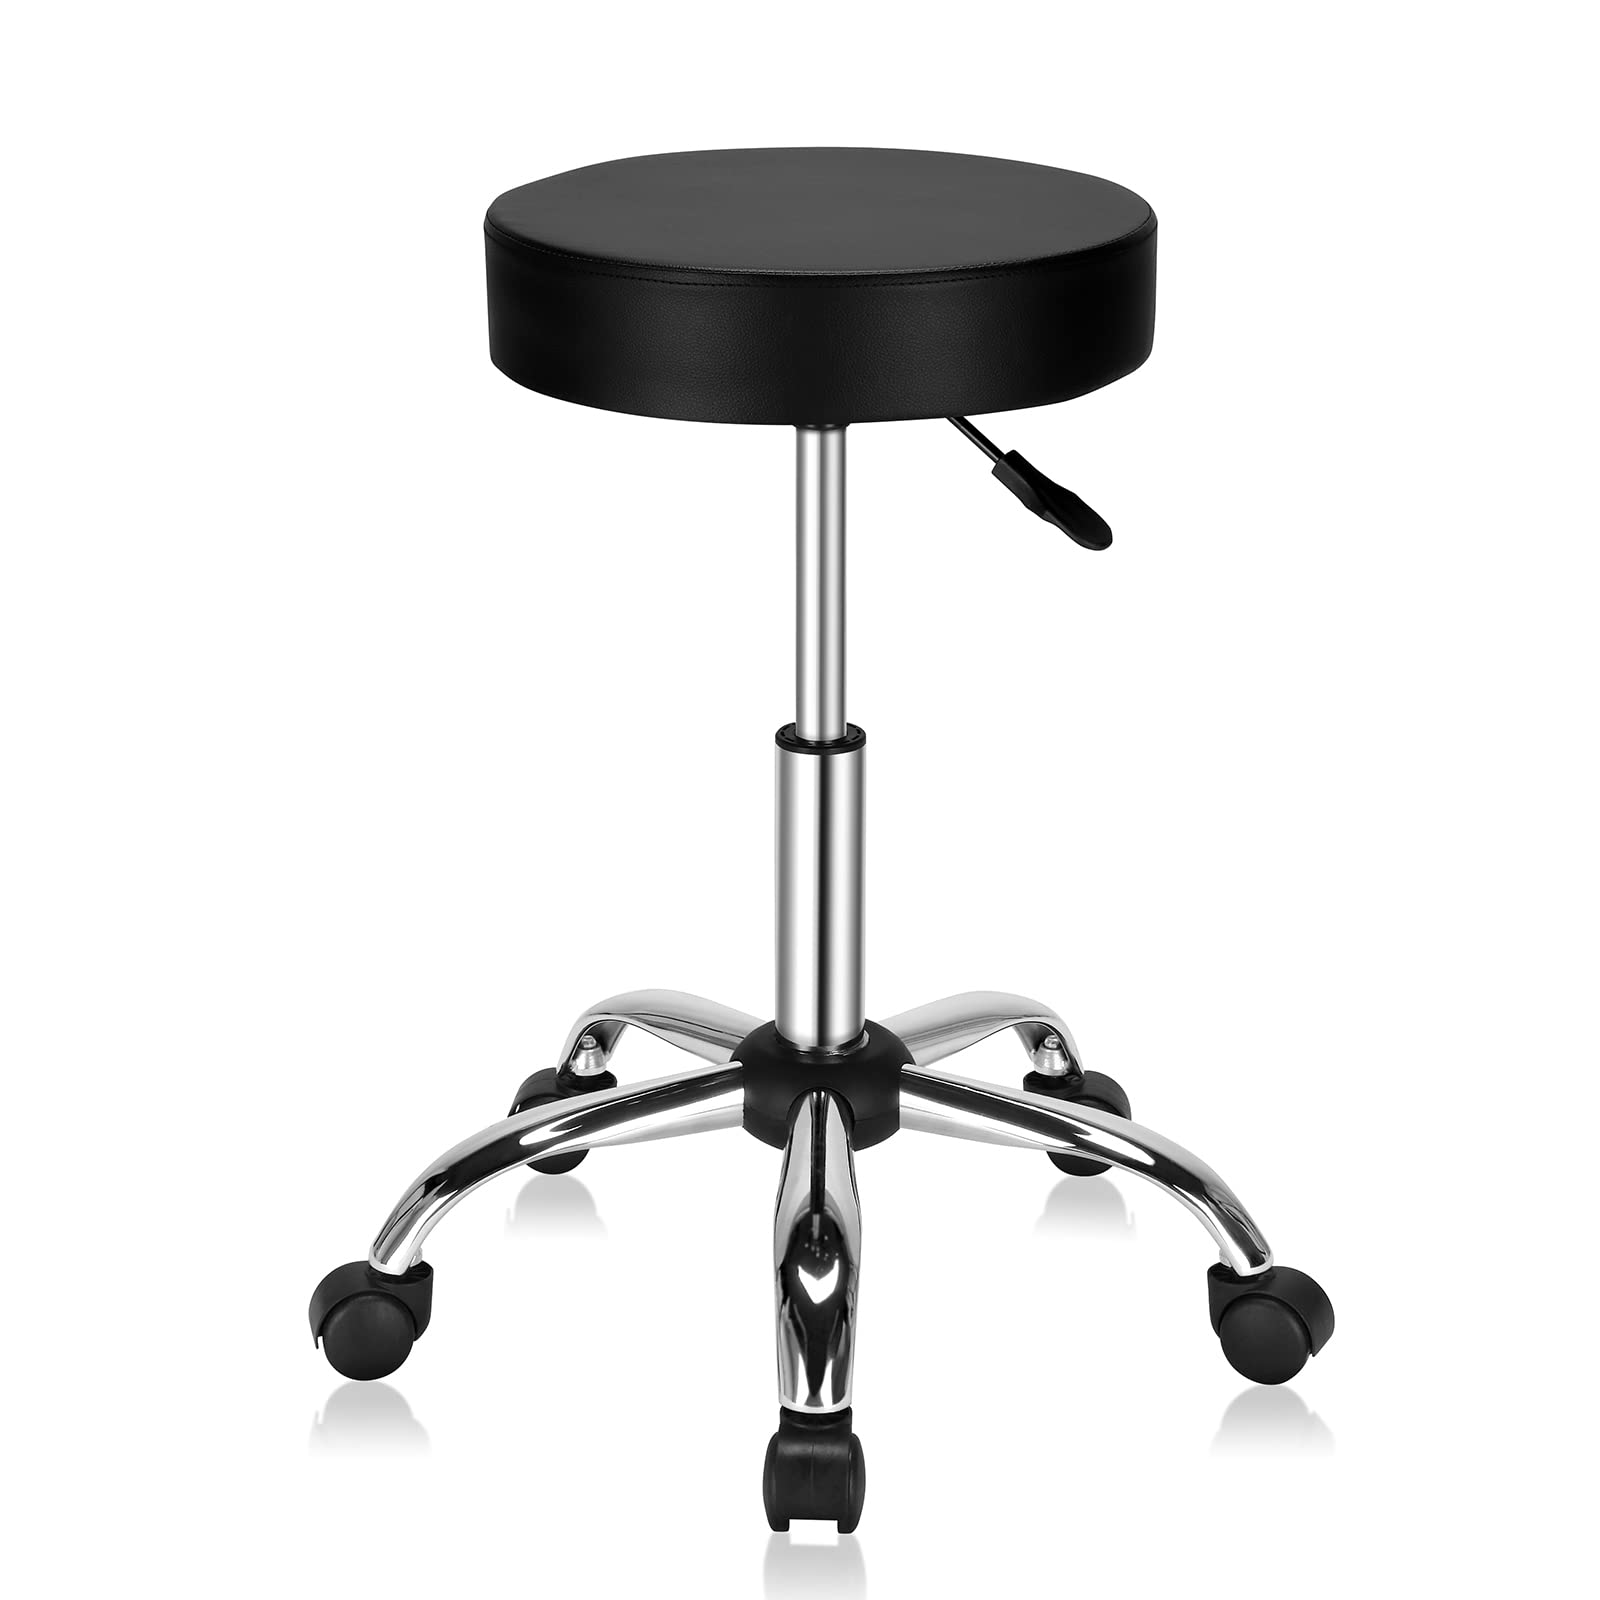 OmySalon Hydraulic Gas Lift Adjustable Salon Massage Stool Swivel Chair with Five 360-Degree Rotating Wheels